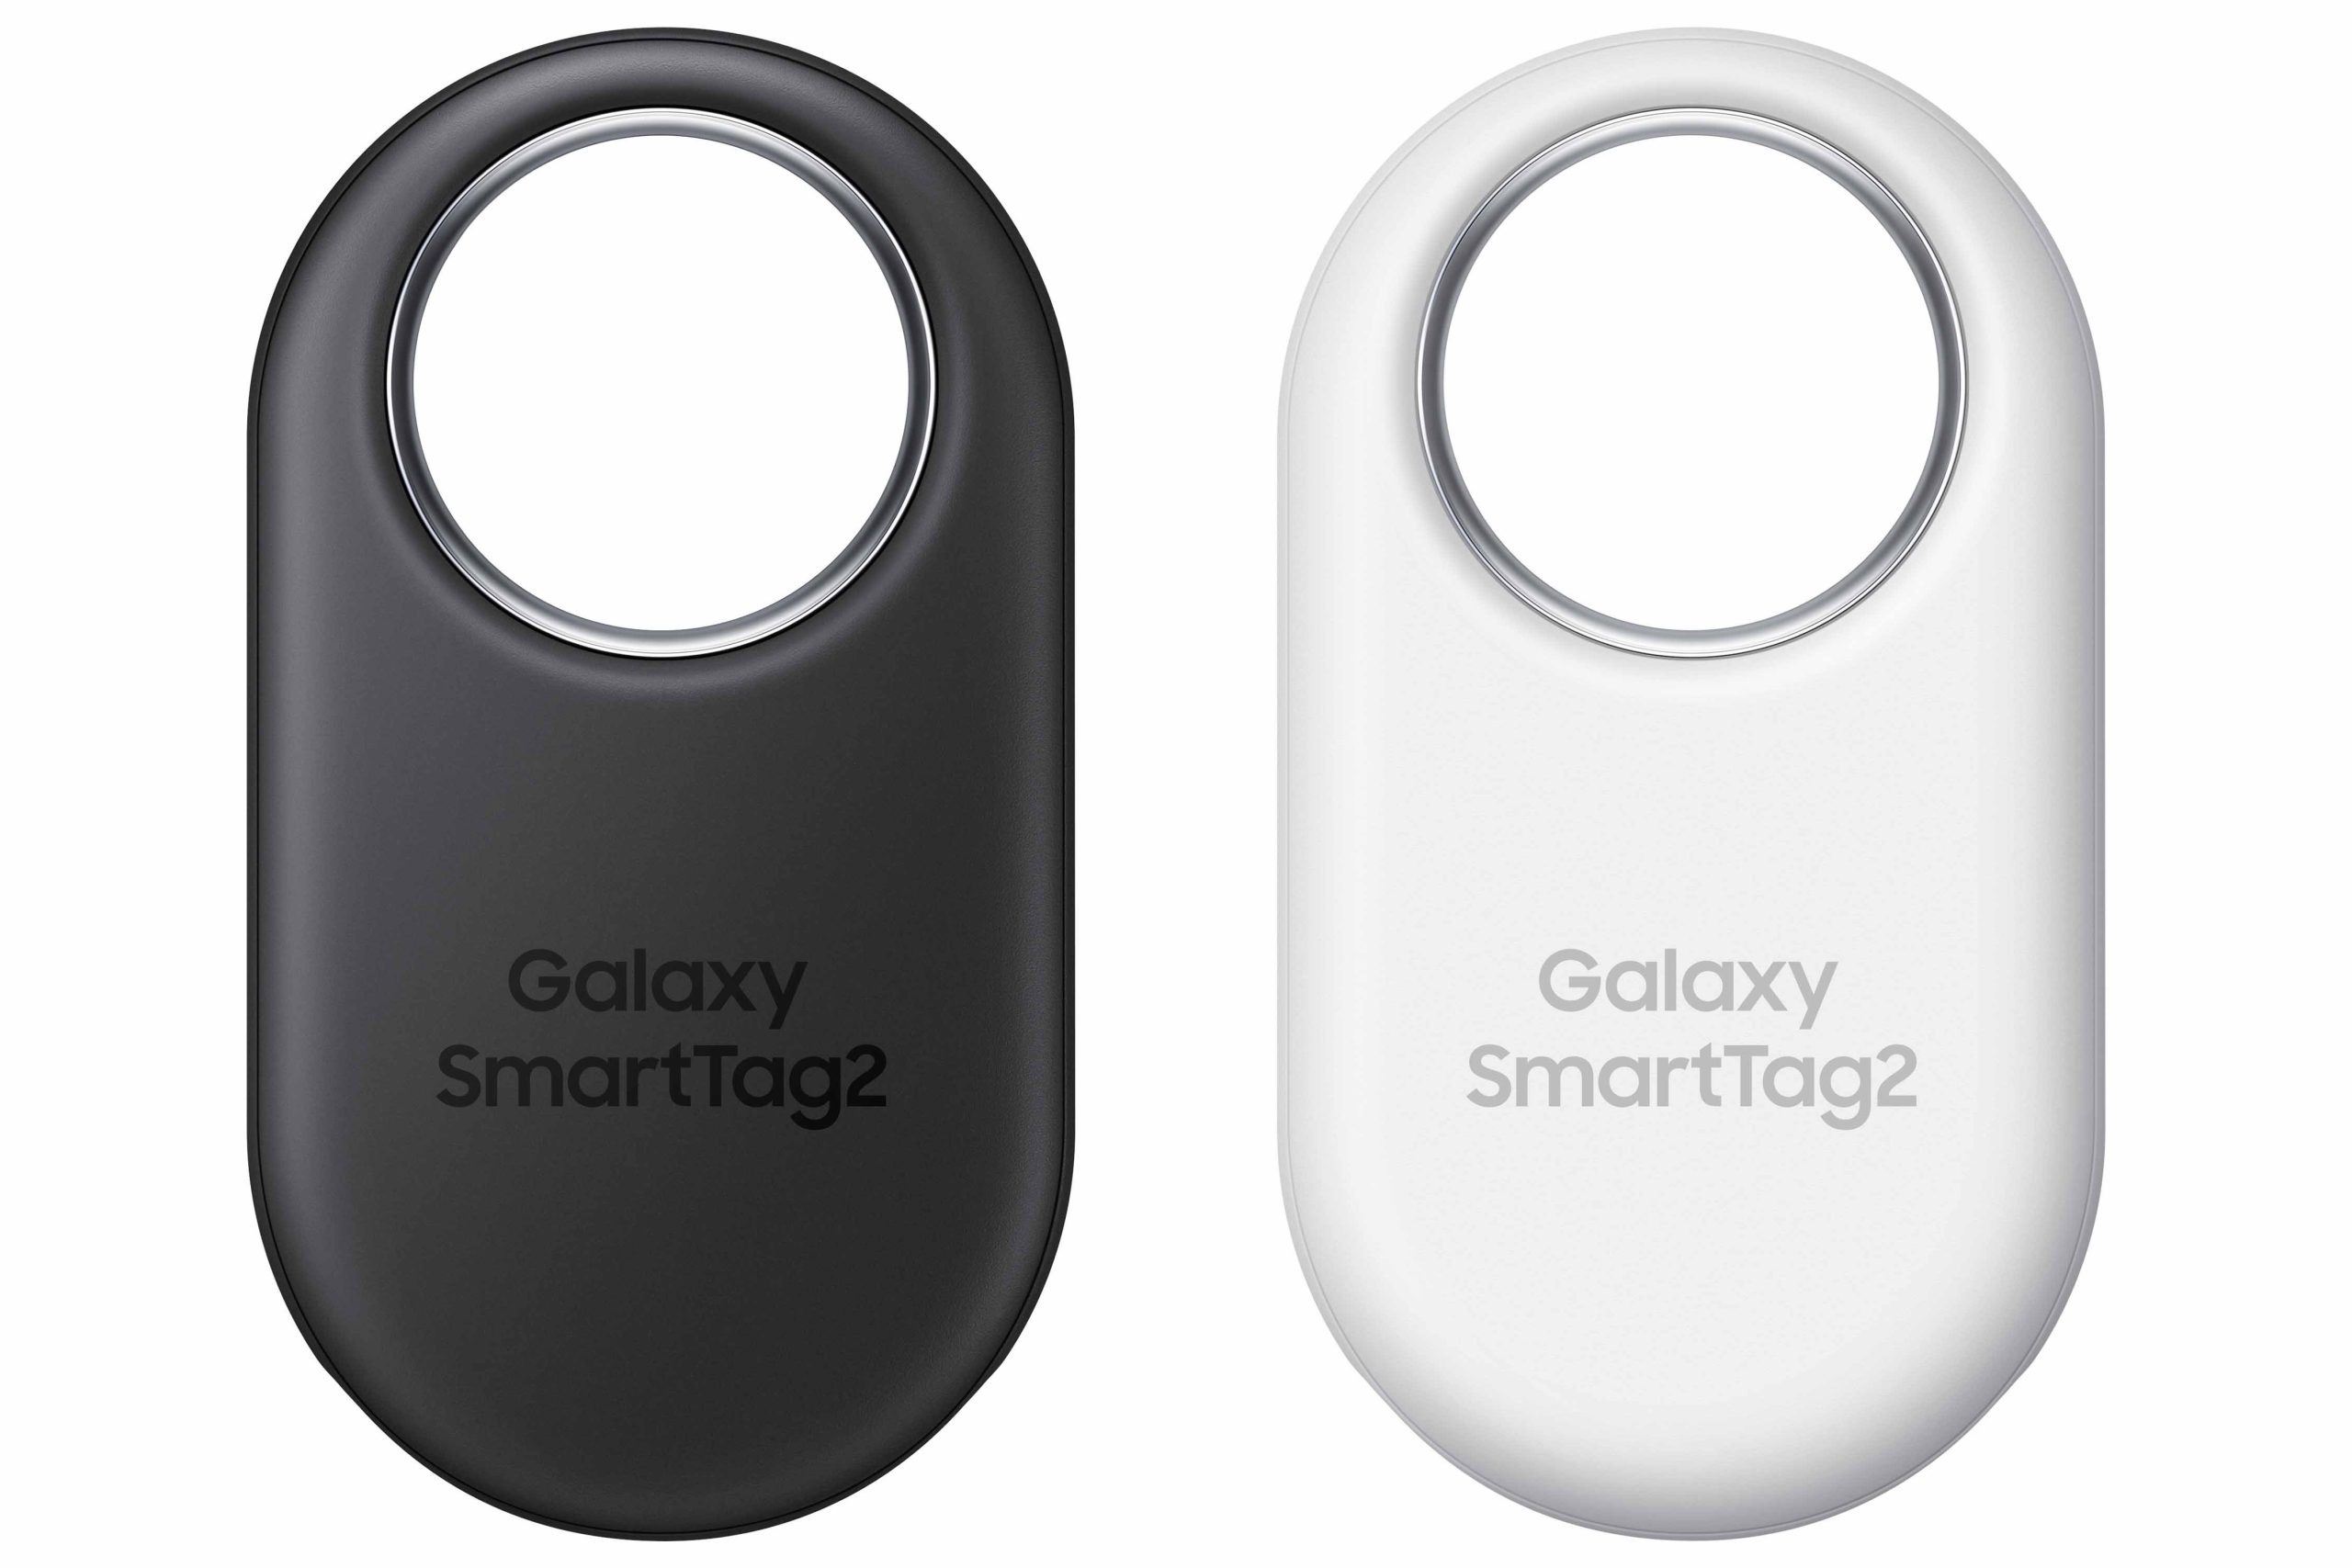 Samsung Galaxy Smart tag 2 Availability & Price